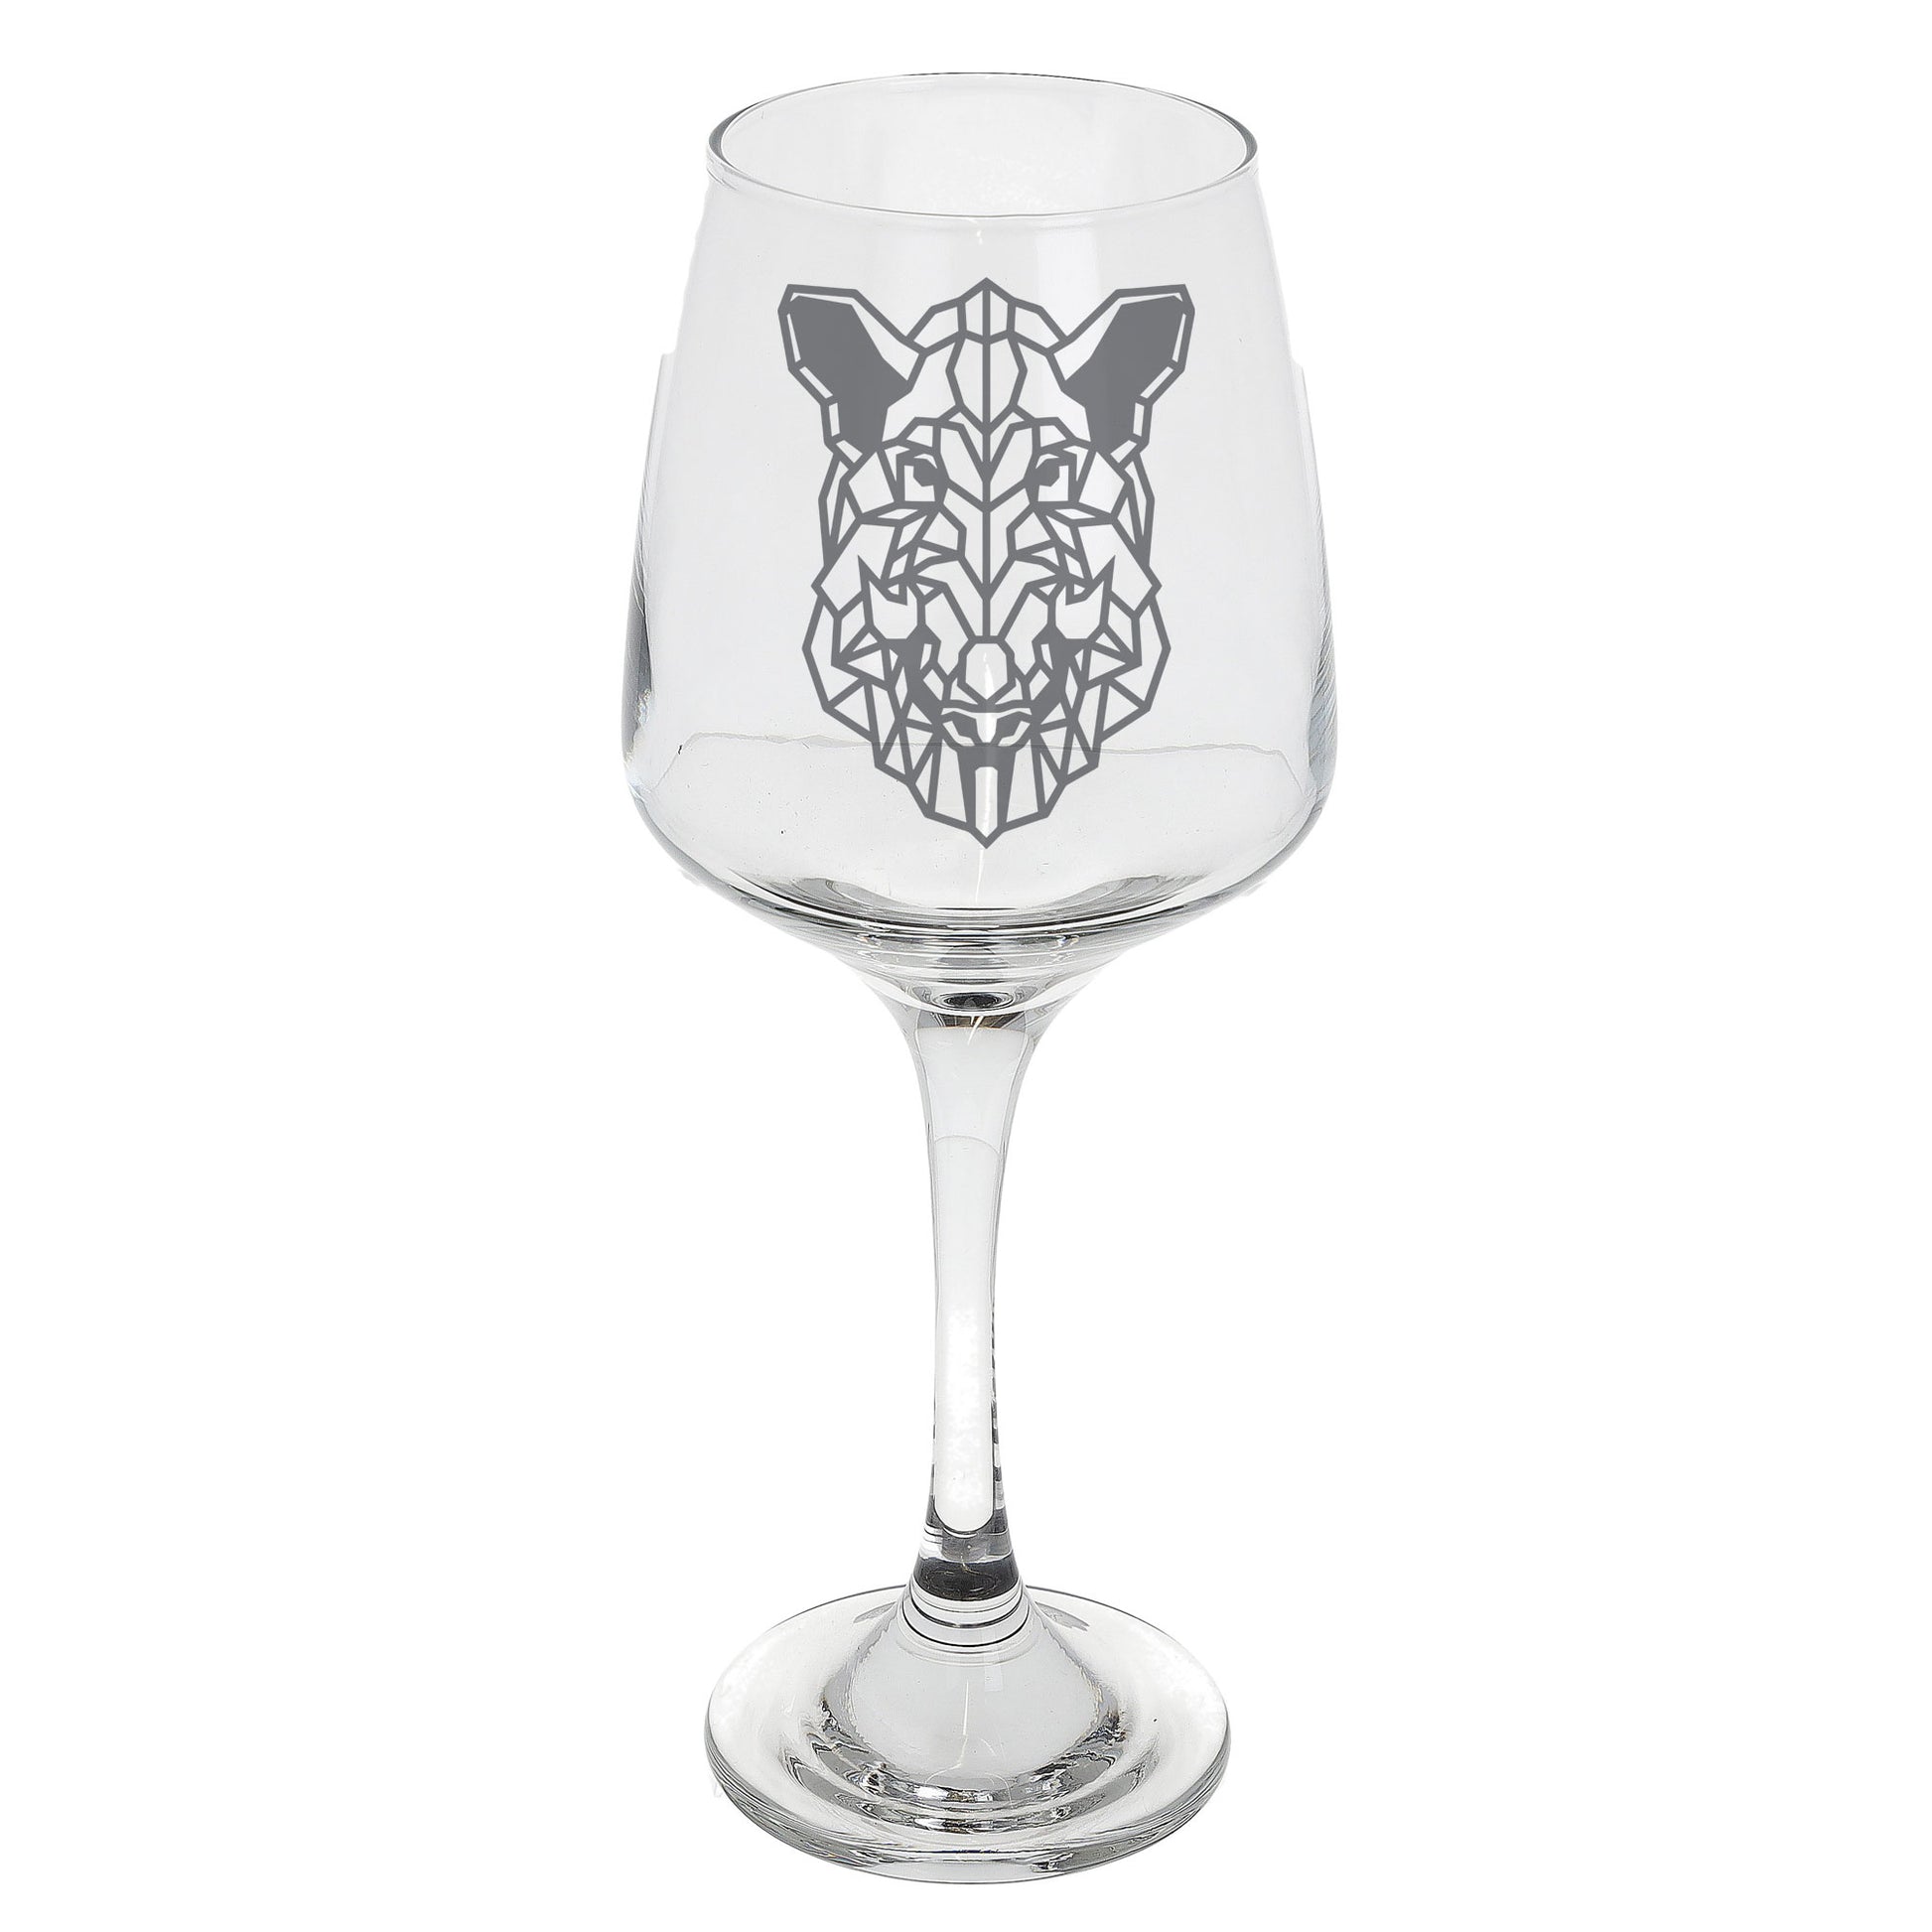 Warthog Engraved Wine Glass  - Always Looking Good -   